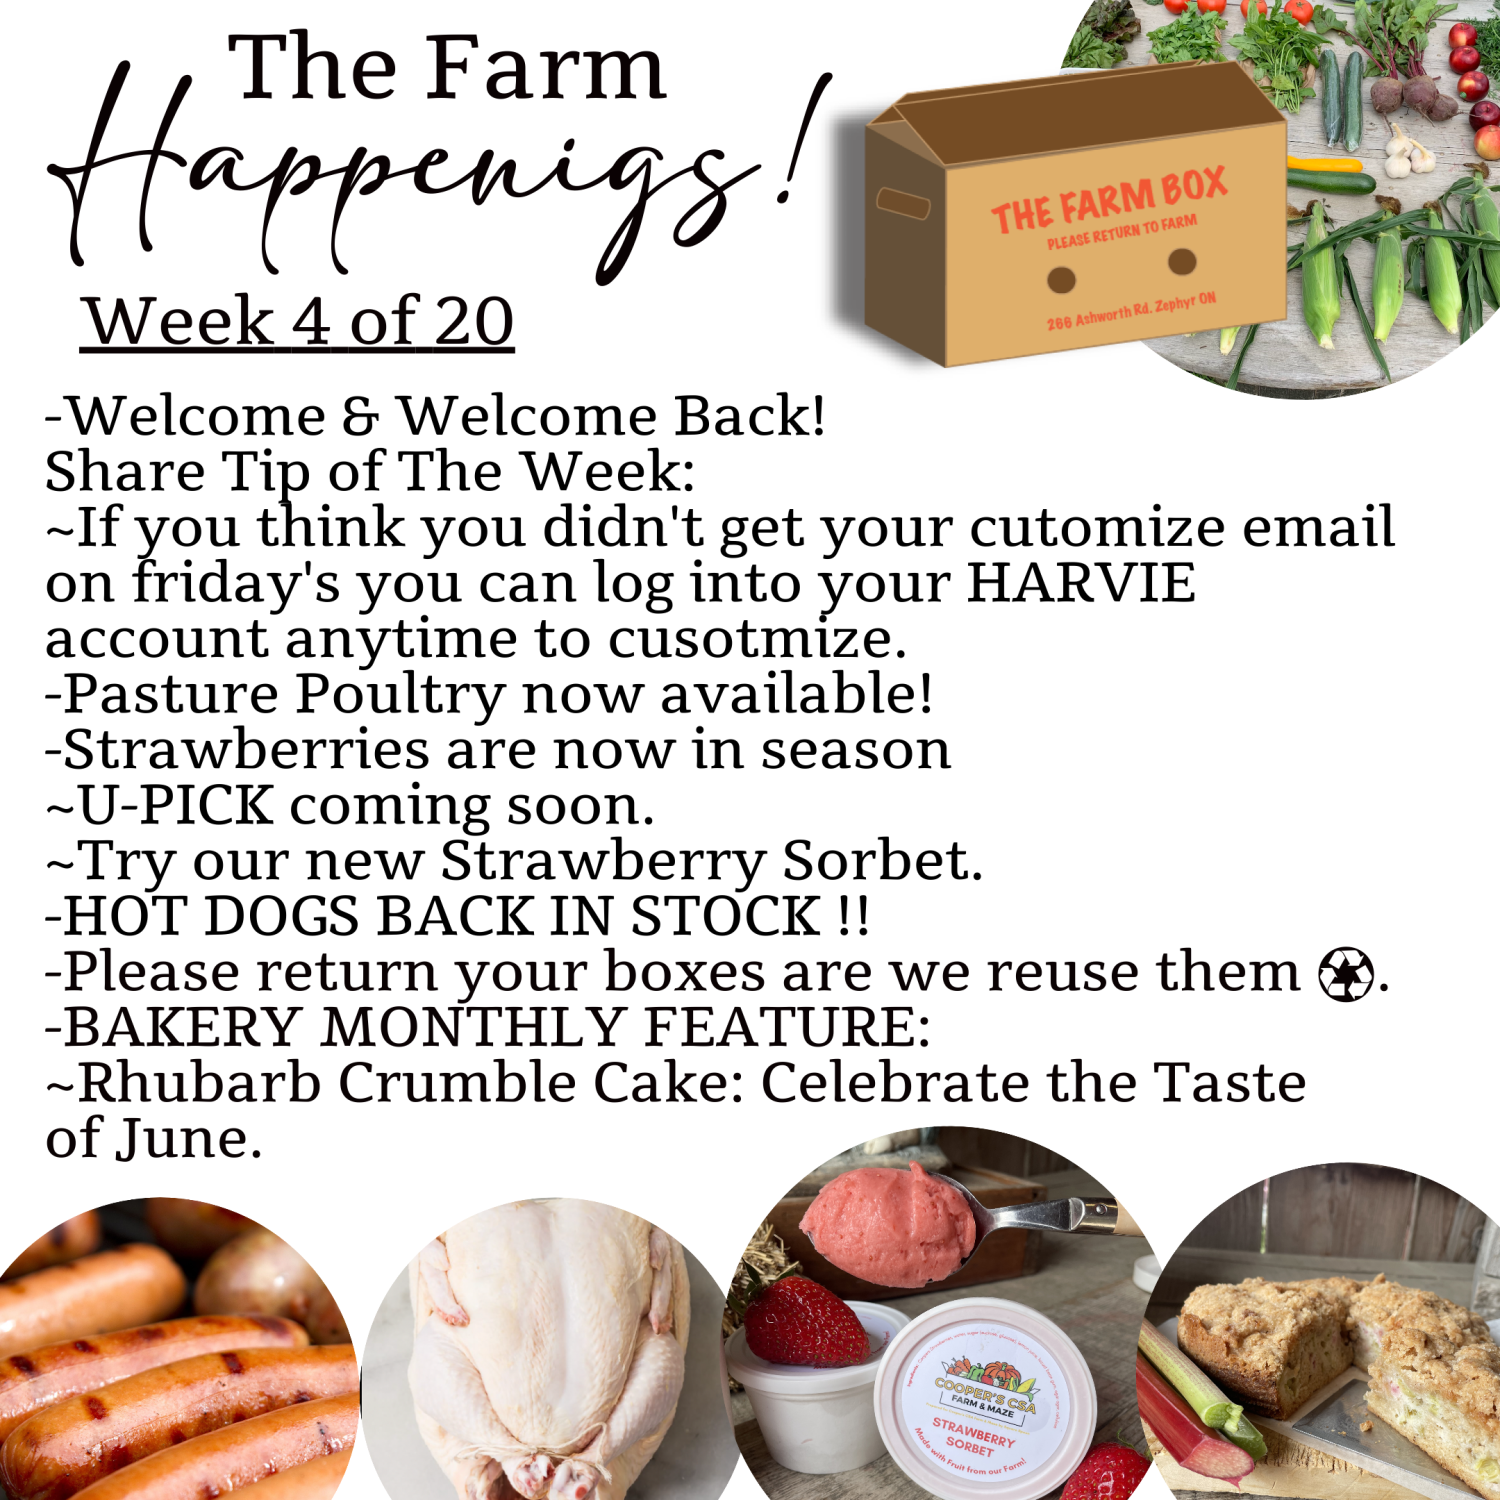 "The Farm Box"-Coopers CSA Farm Farm Happenings Week 4 of 20